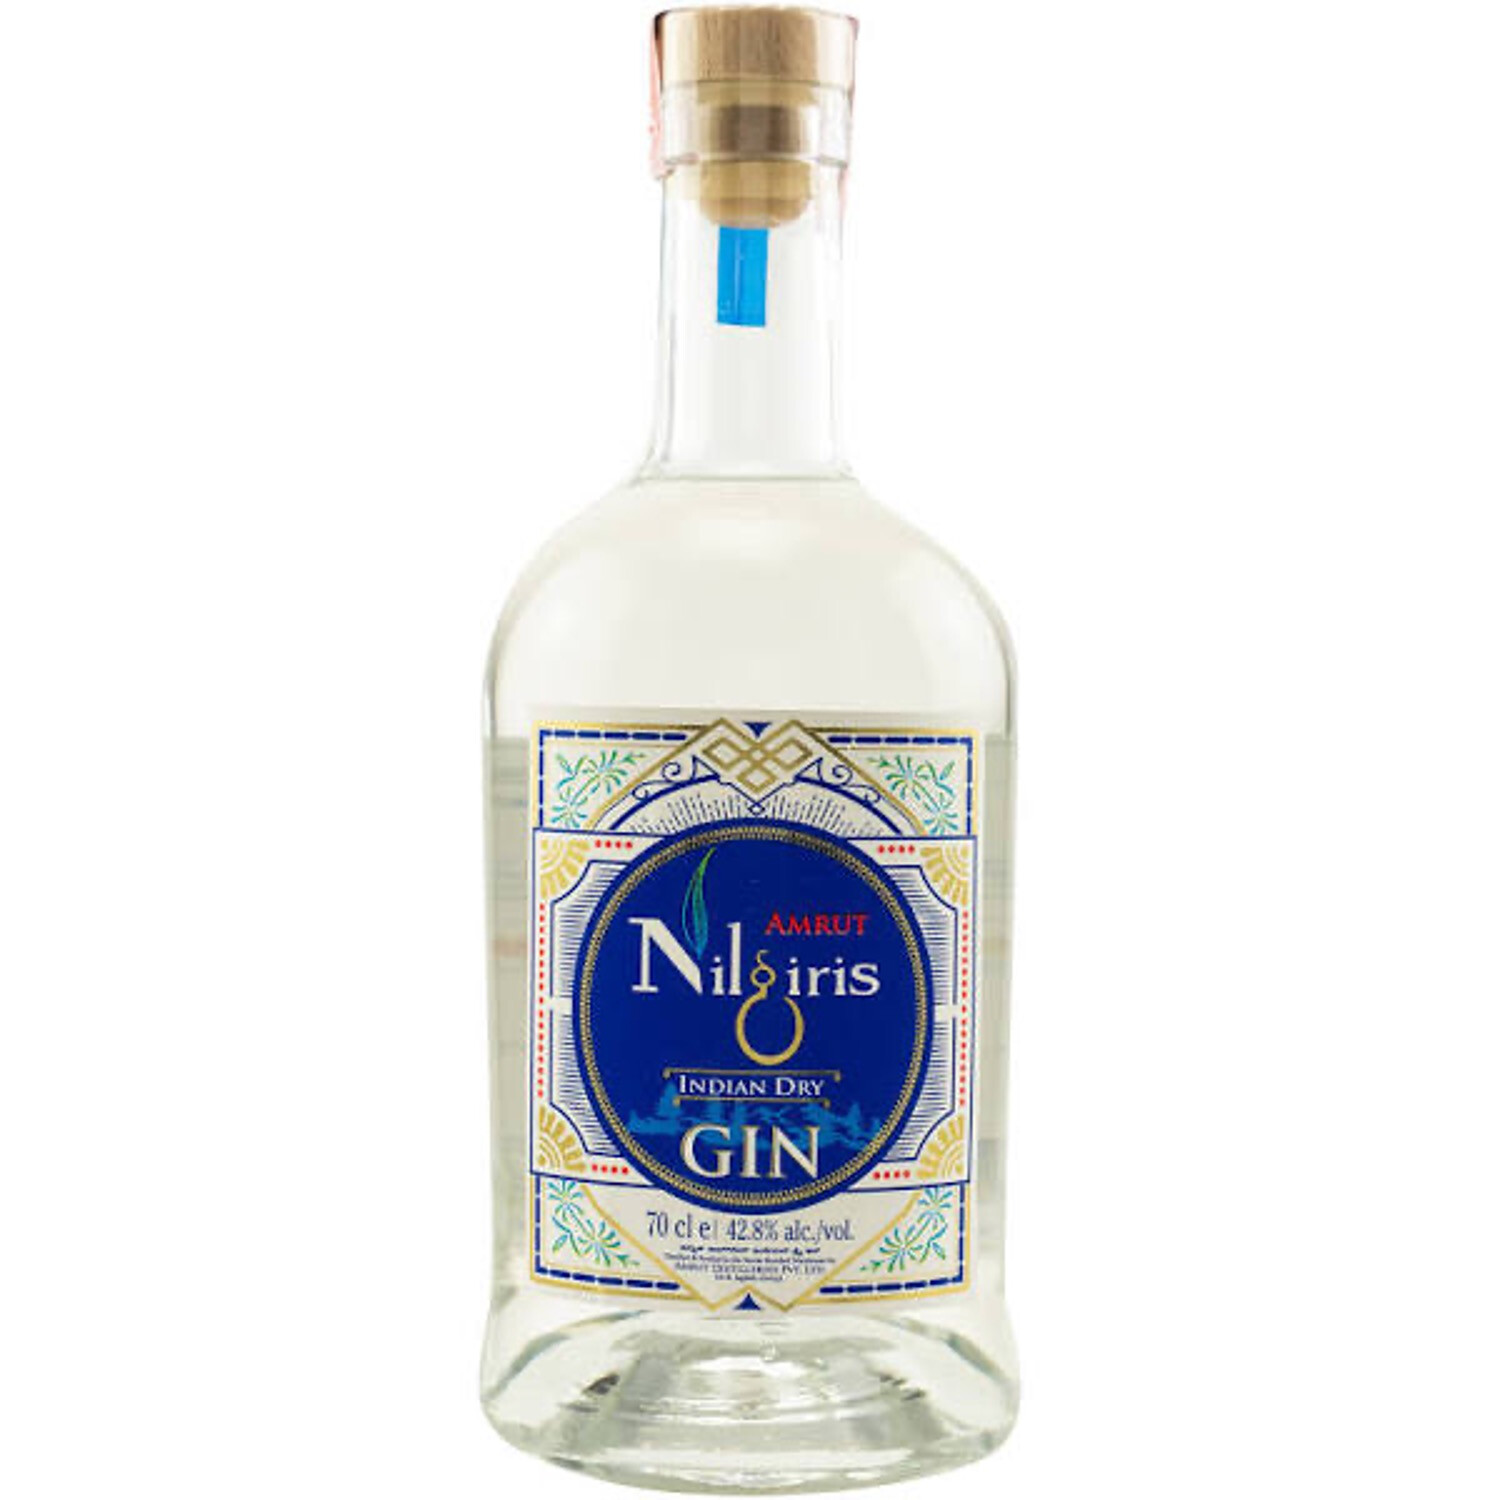 Amrut Nilgris Indian Dry Gin